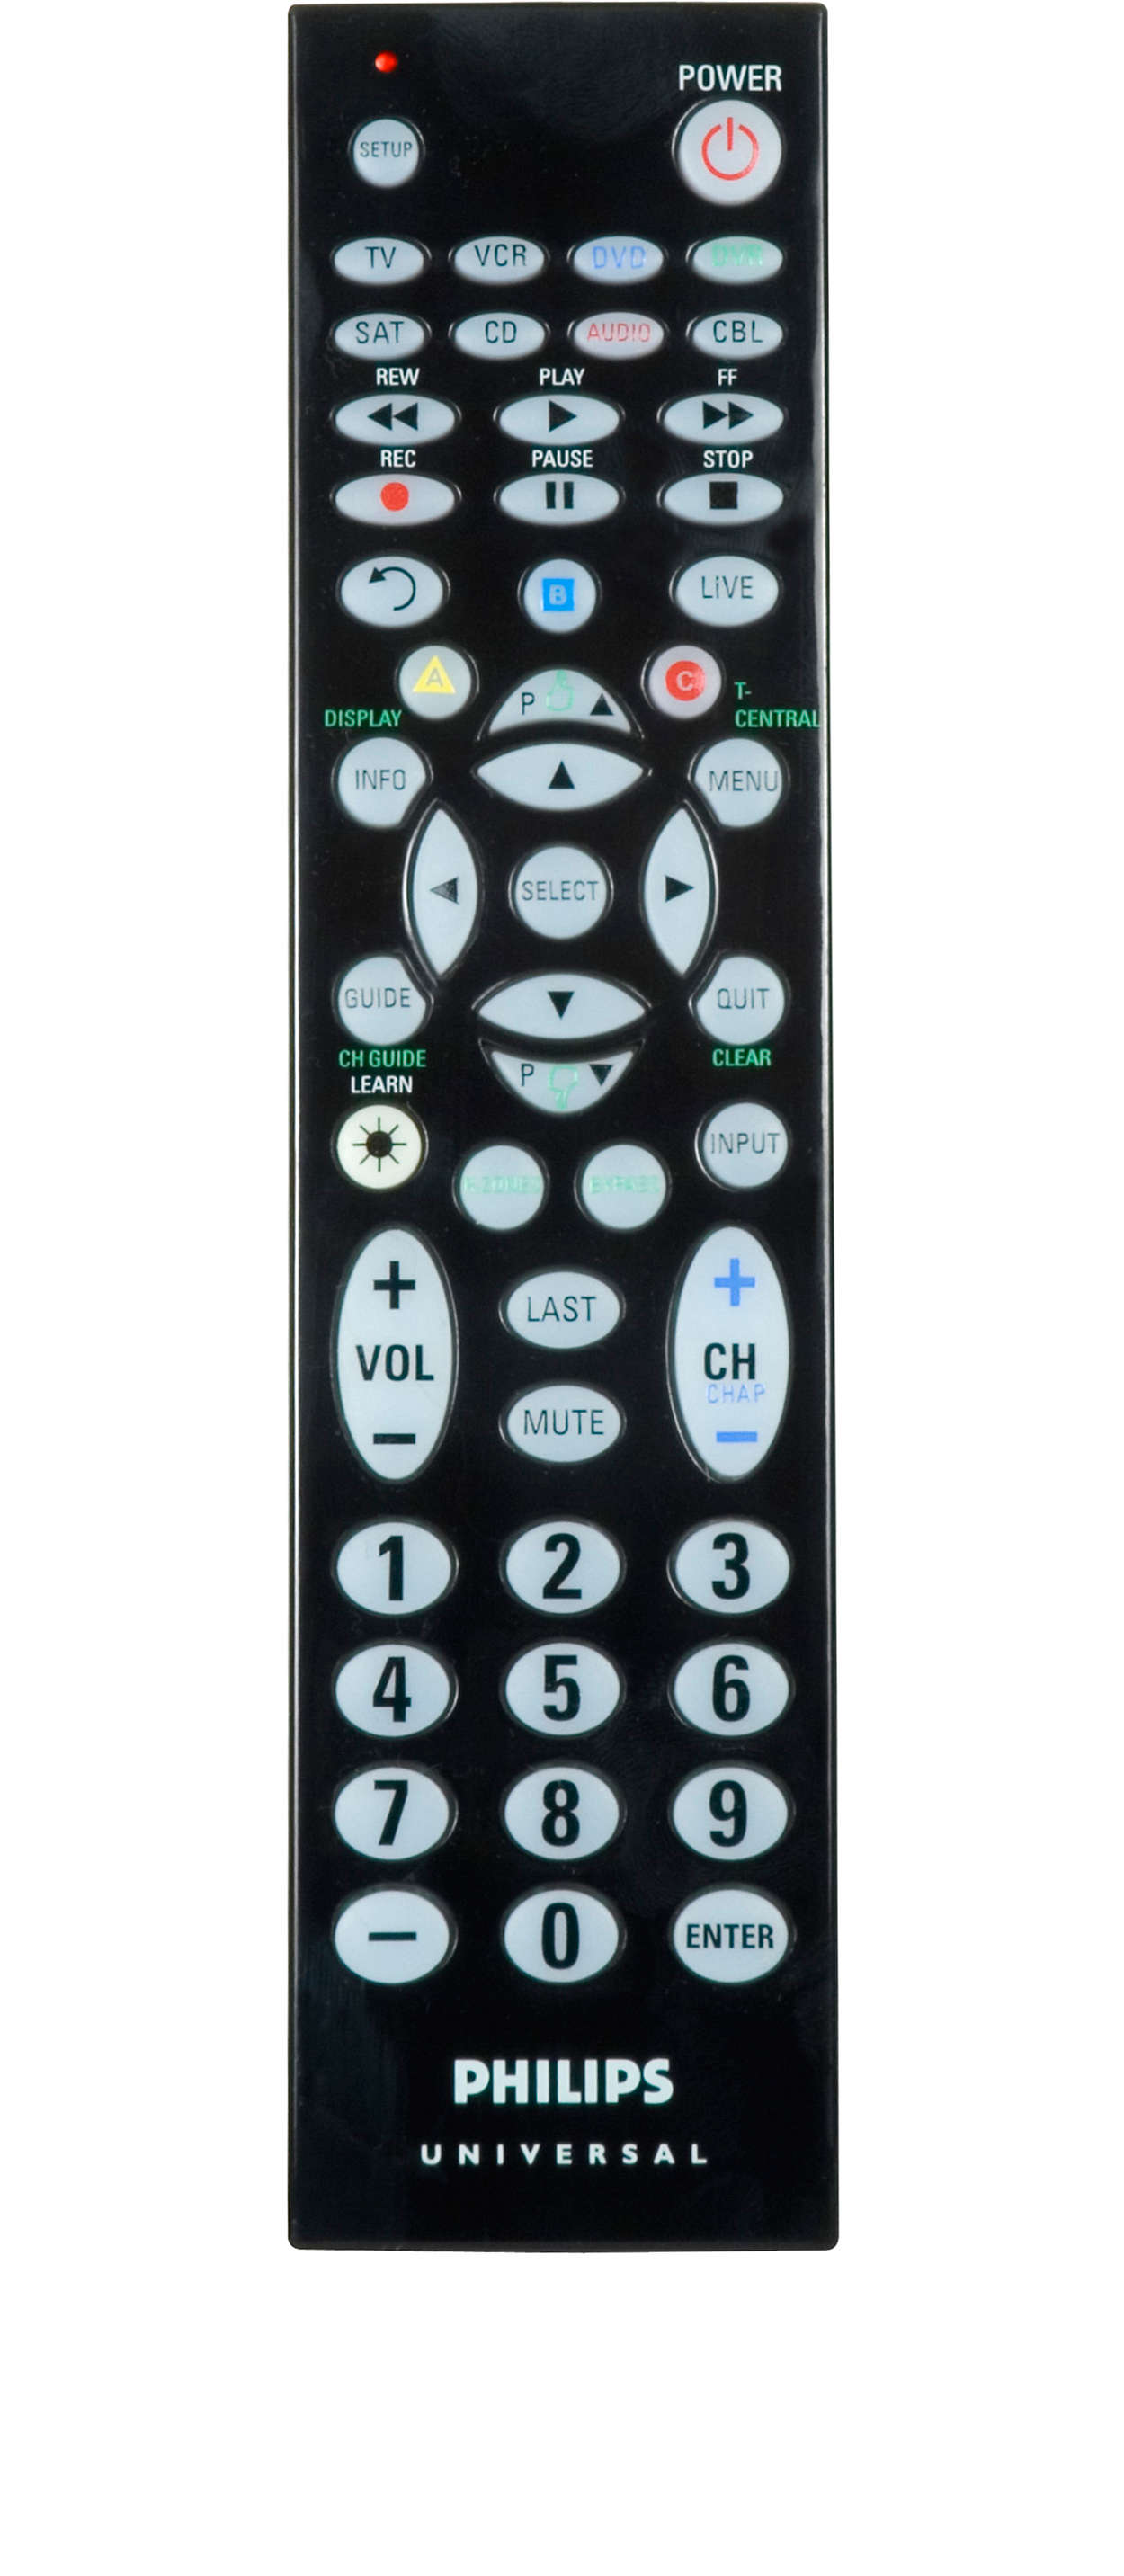 8 device universal remote